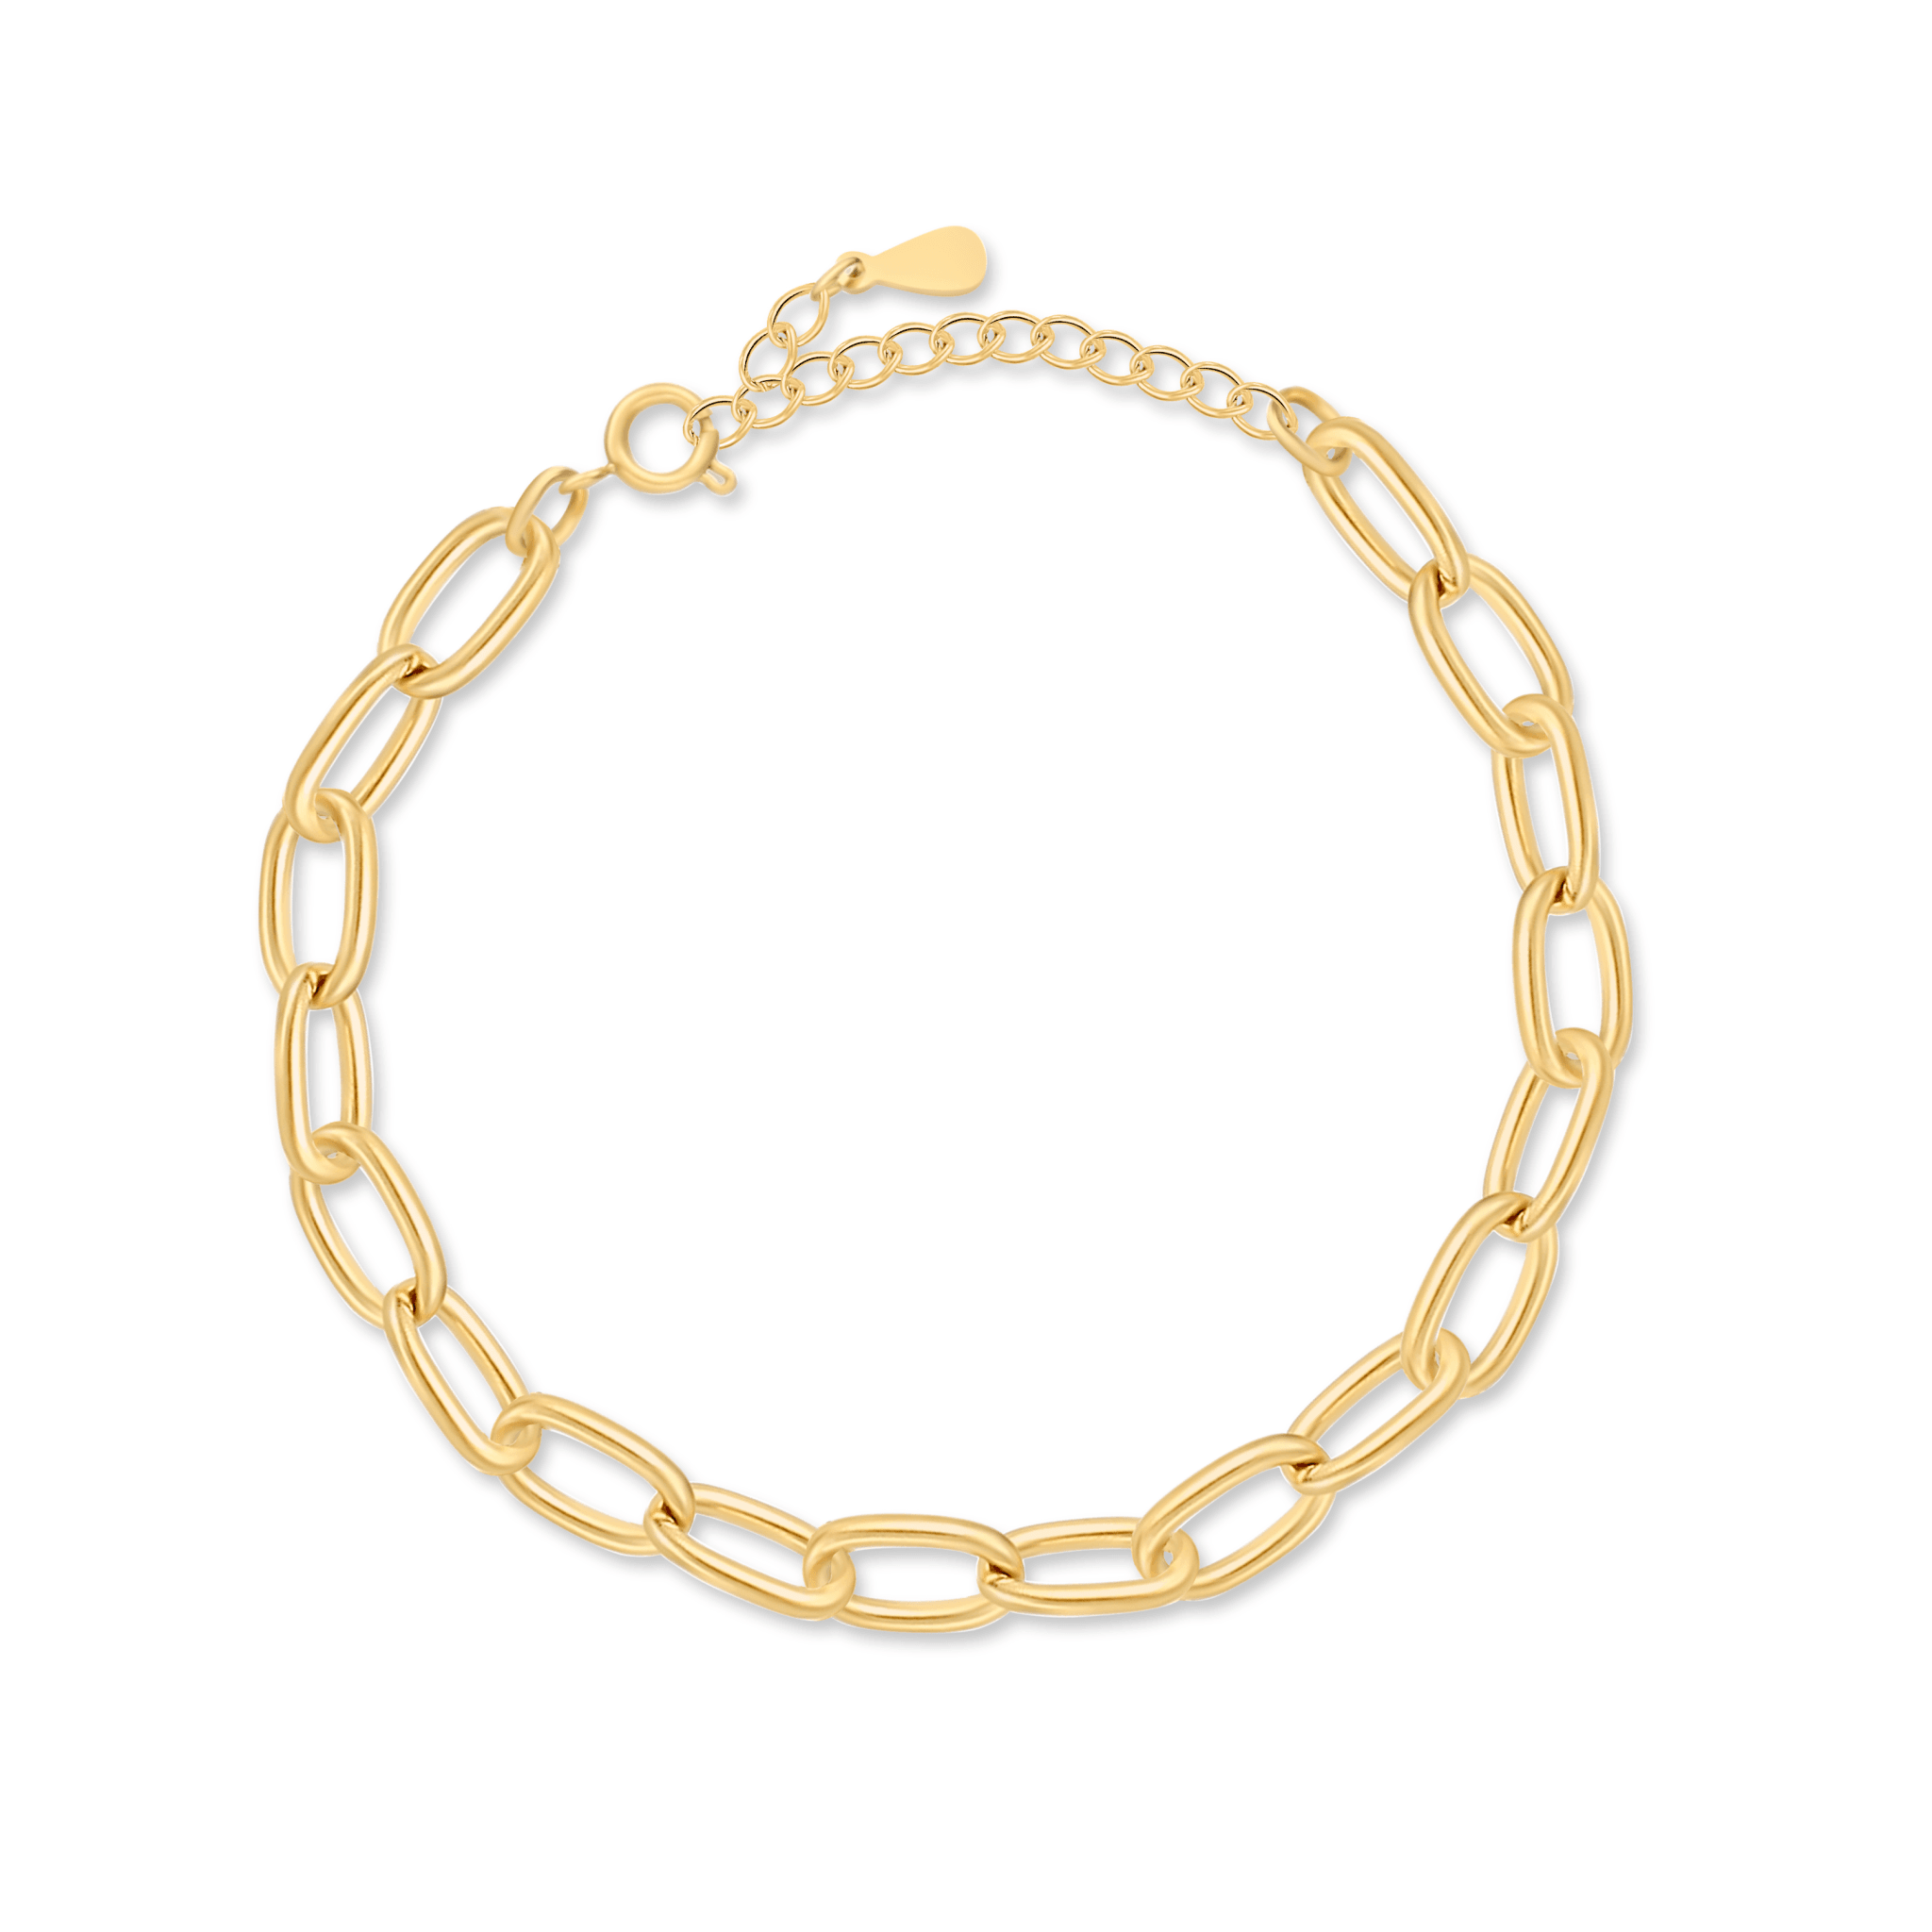 Chain Link Bracelet - SophiaJewels 18K Gold Plated